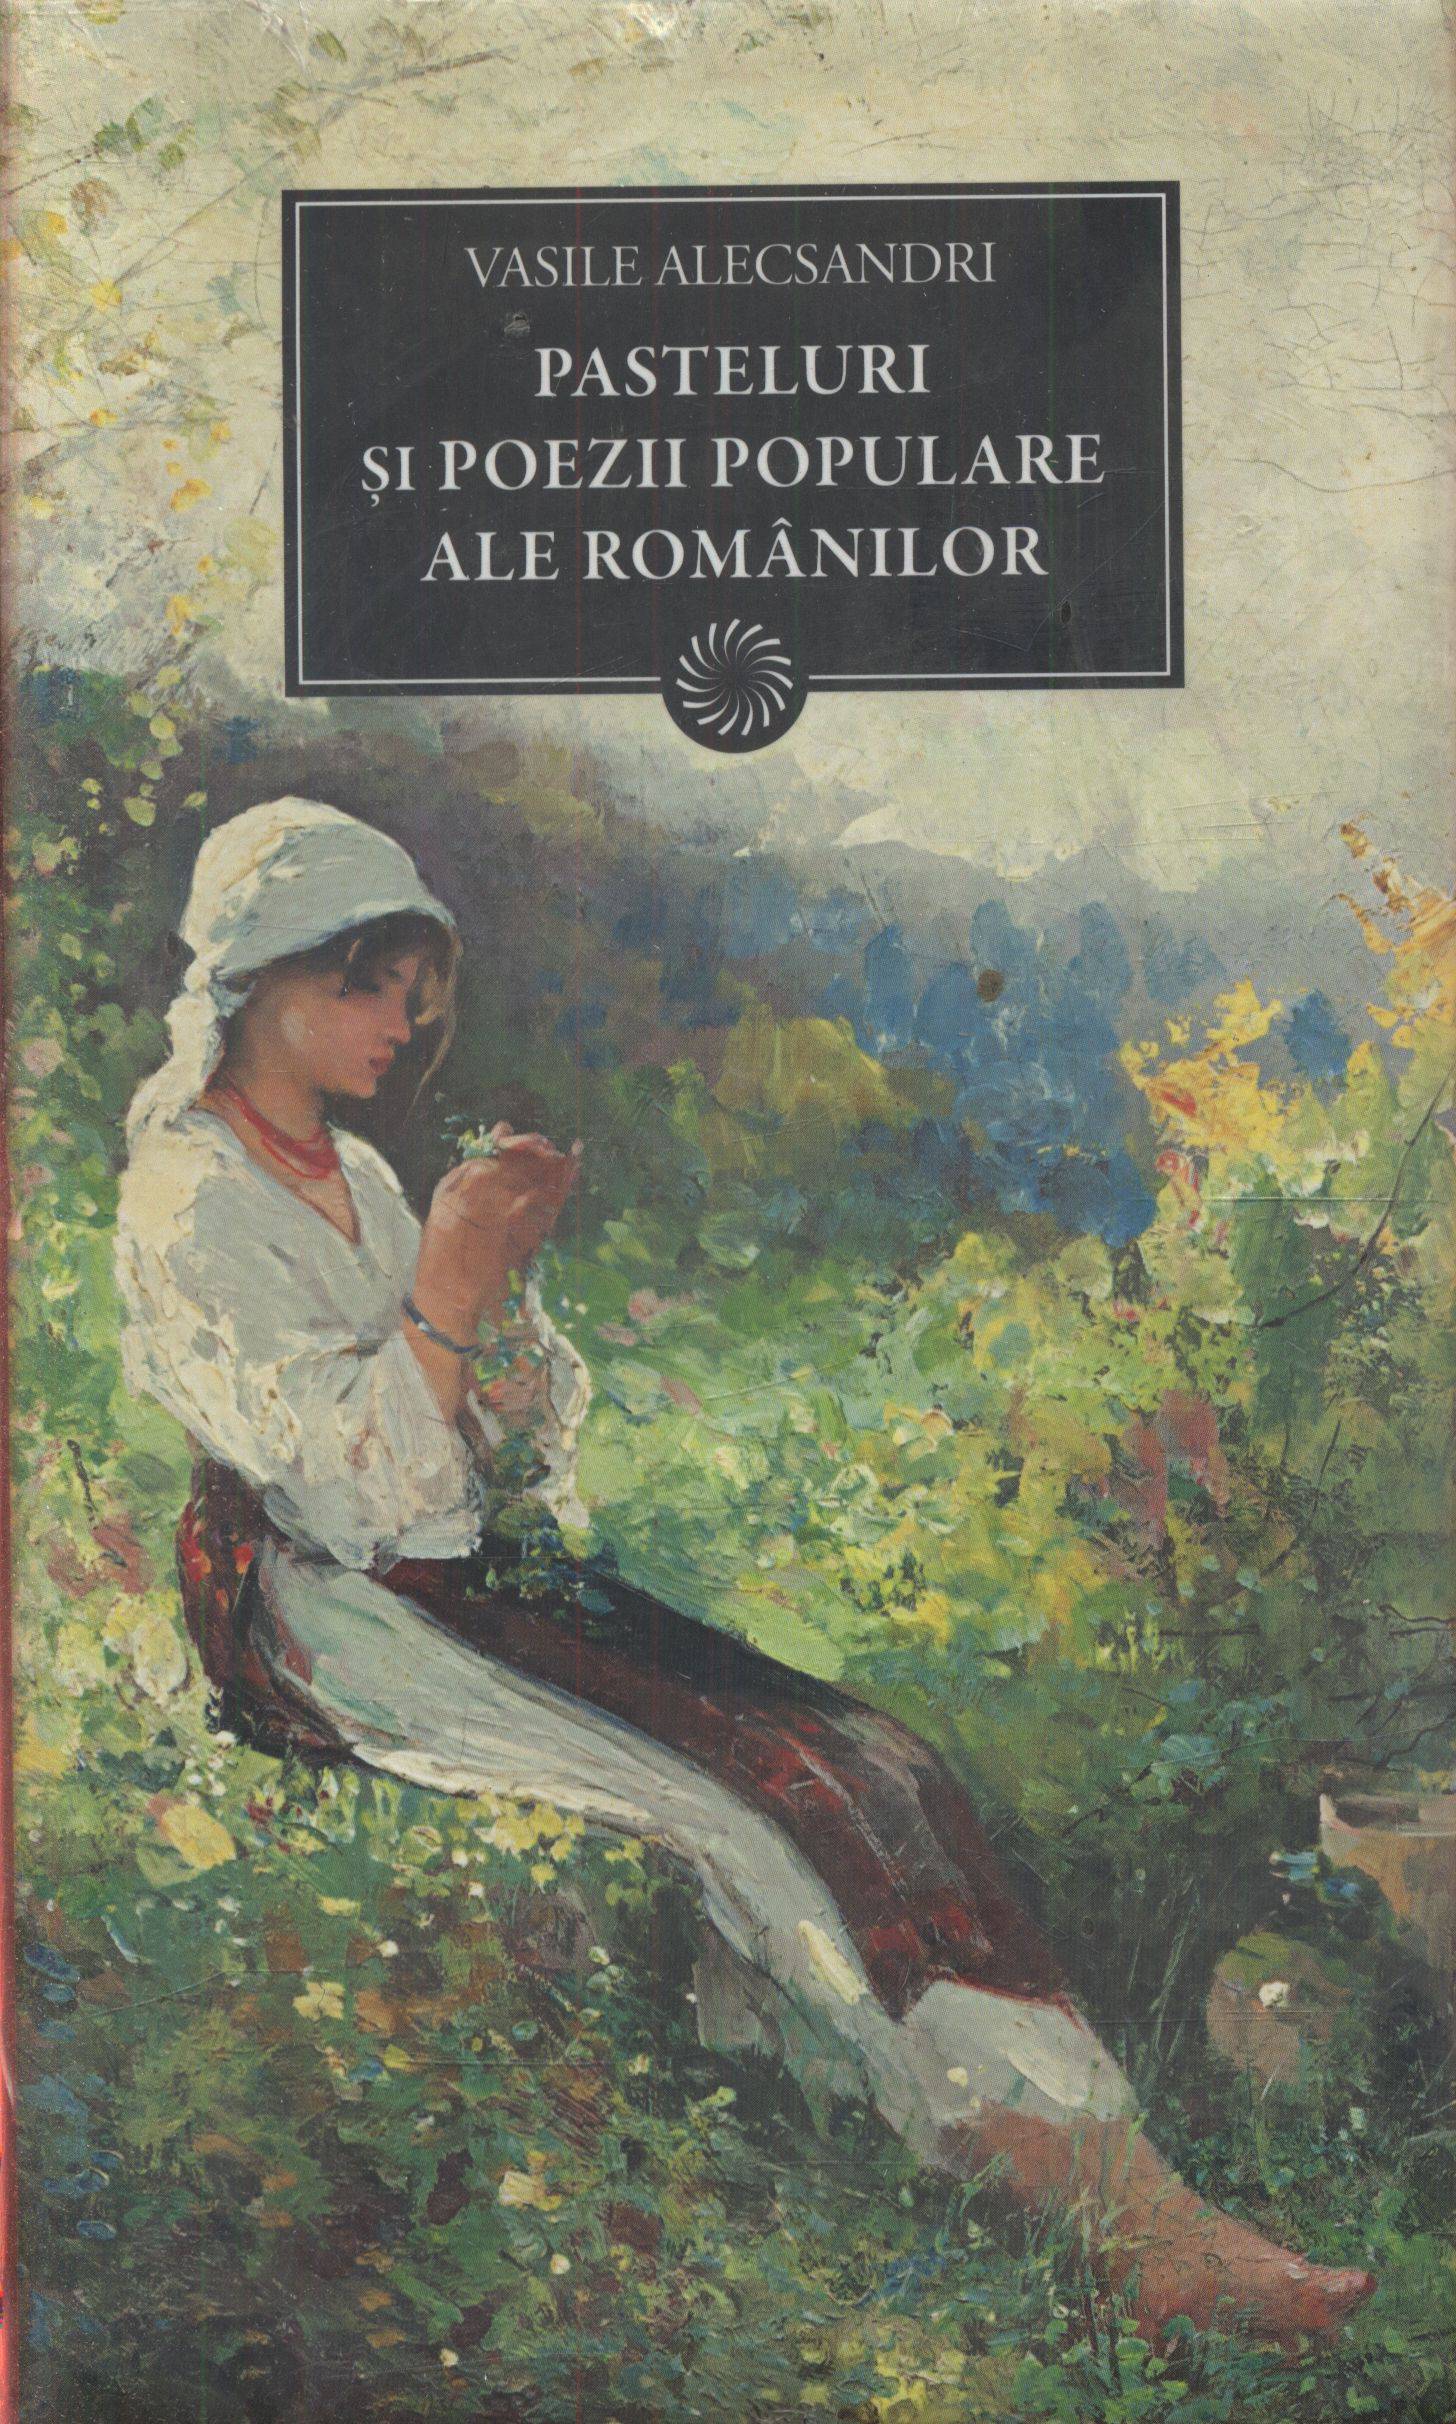 Pasteluri si poezii populare ale romanilor - Vasile Alecsandri